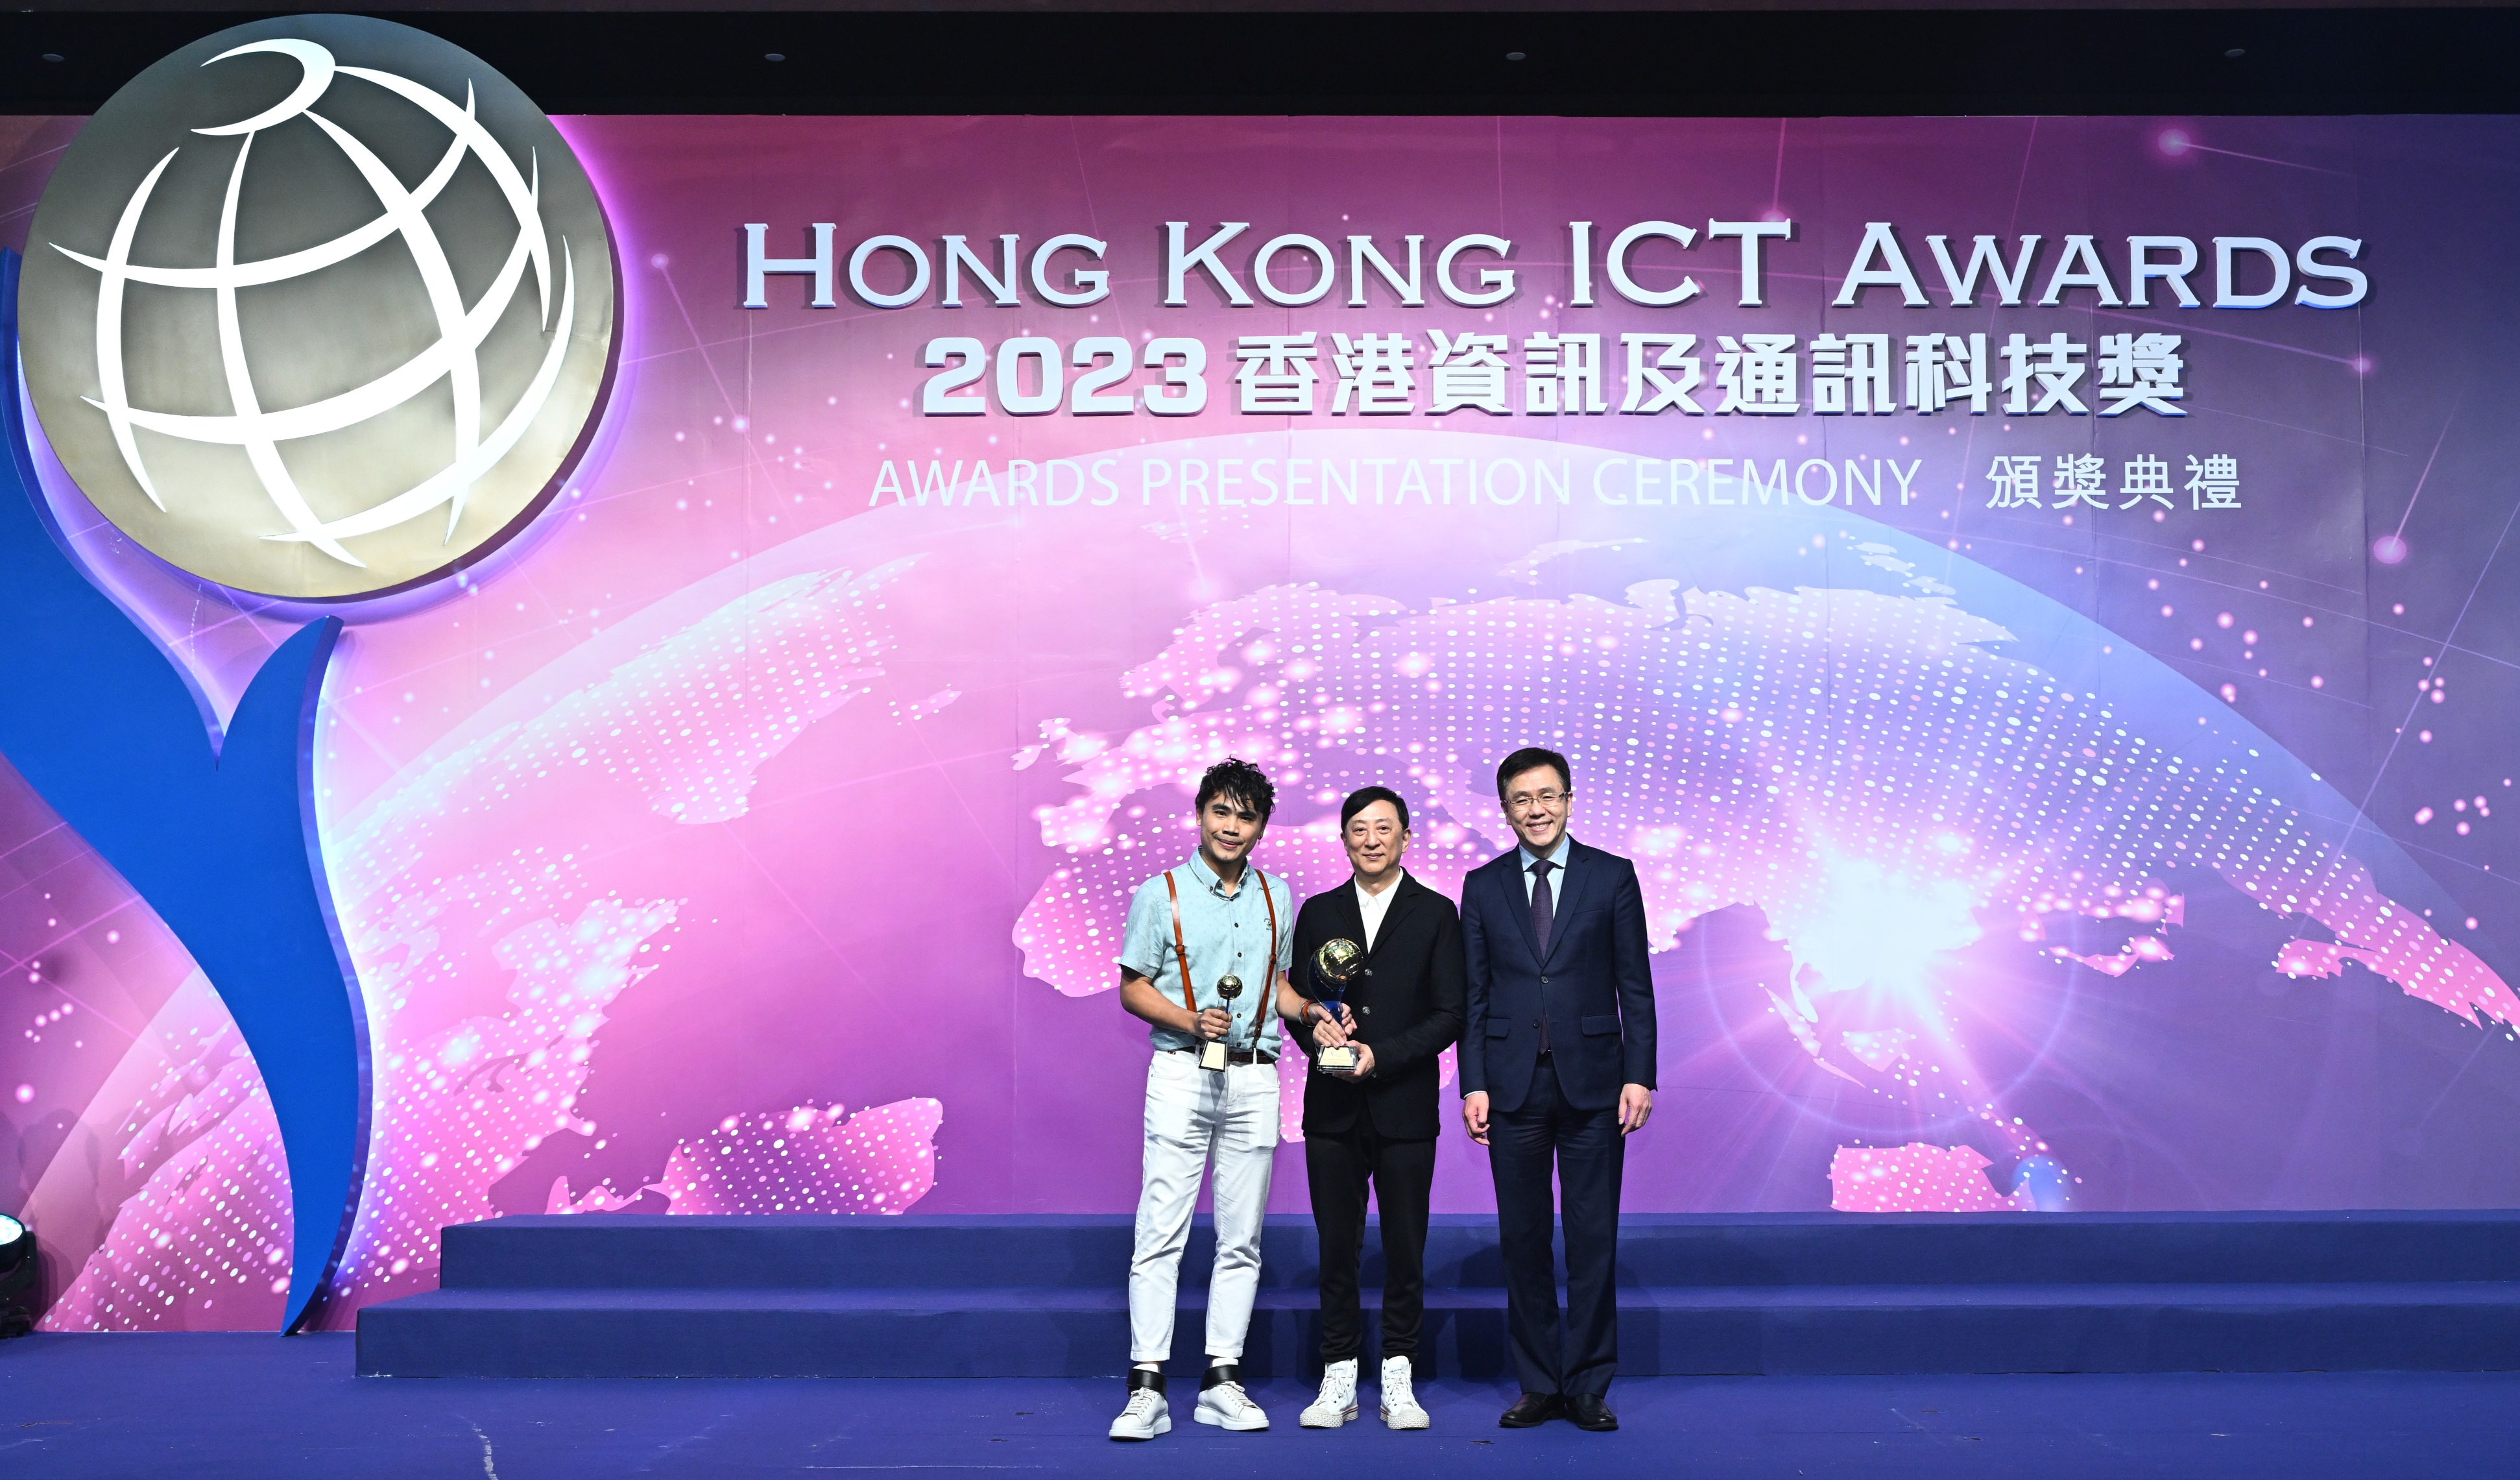 Hong Kong ICT Awards 2023 Digital Entertainment Grand Award Winner